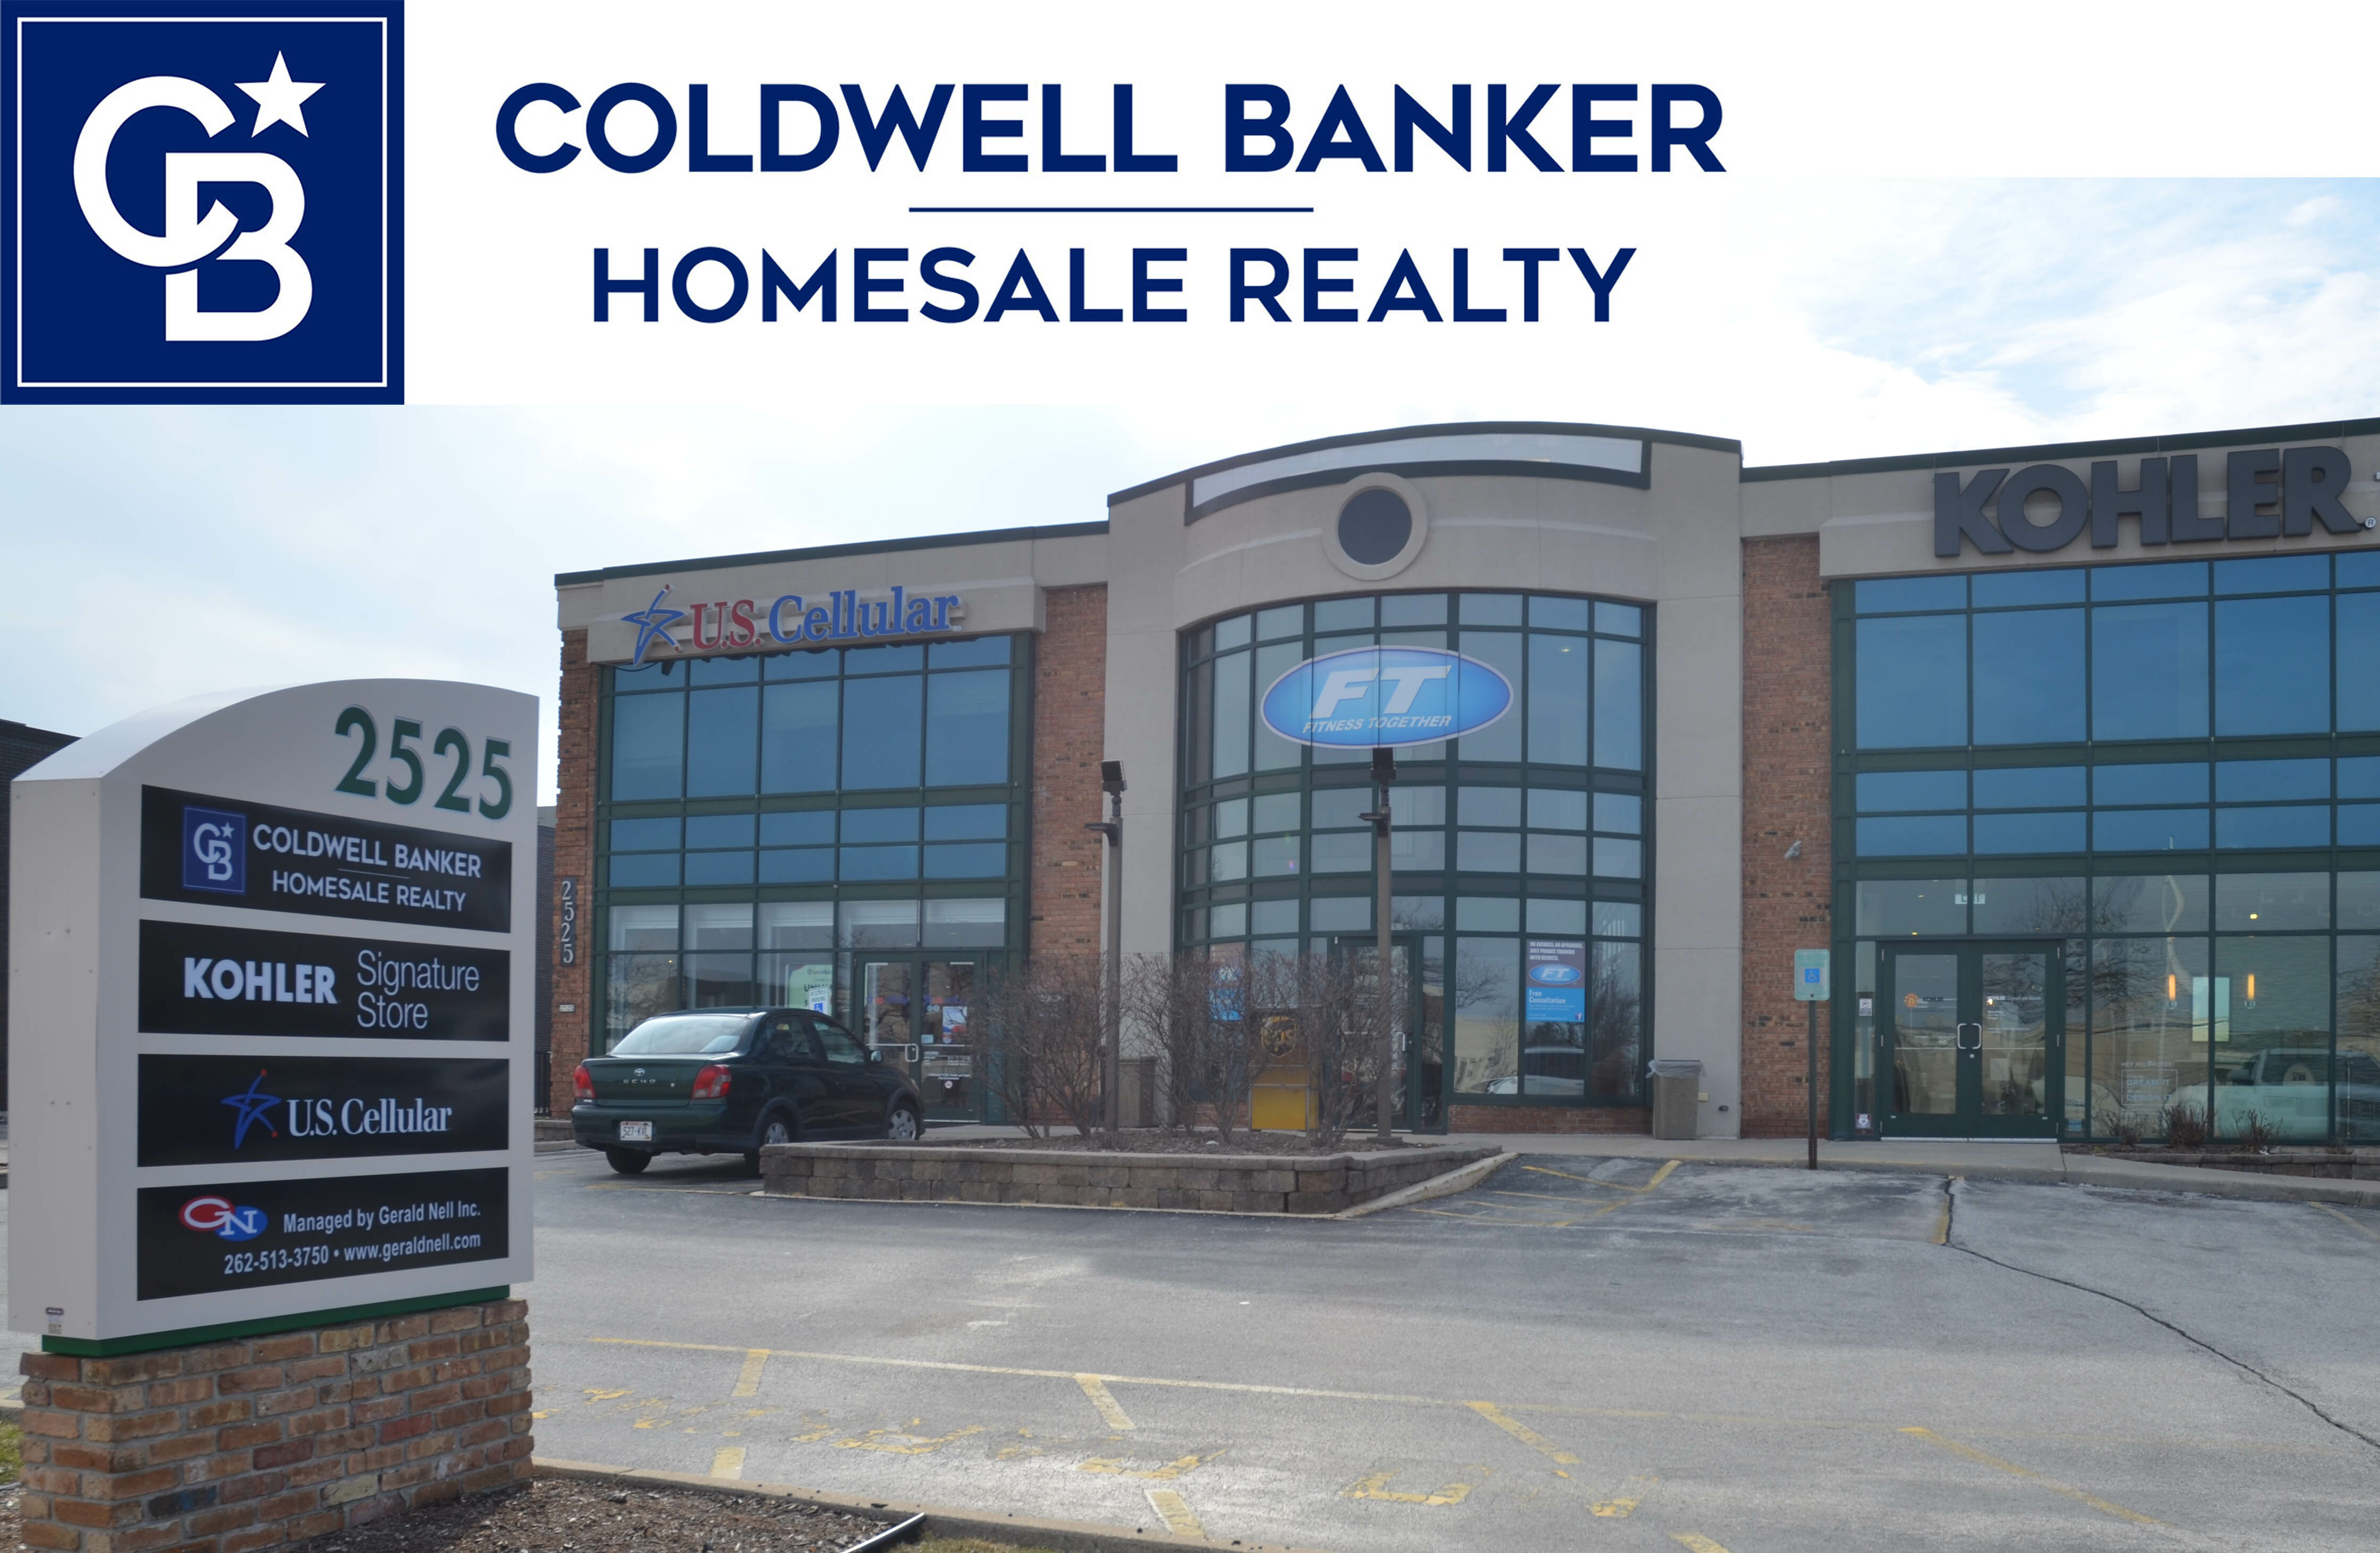 Coldwell Banker - Wauwatosa,Wauwatosa,Homesale Realty